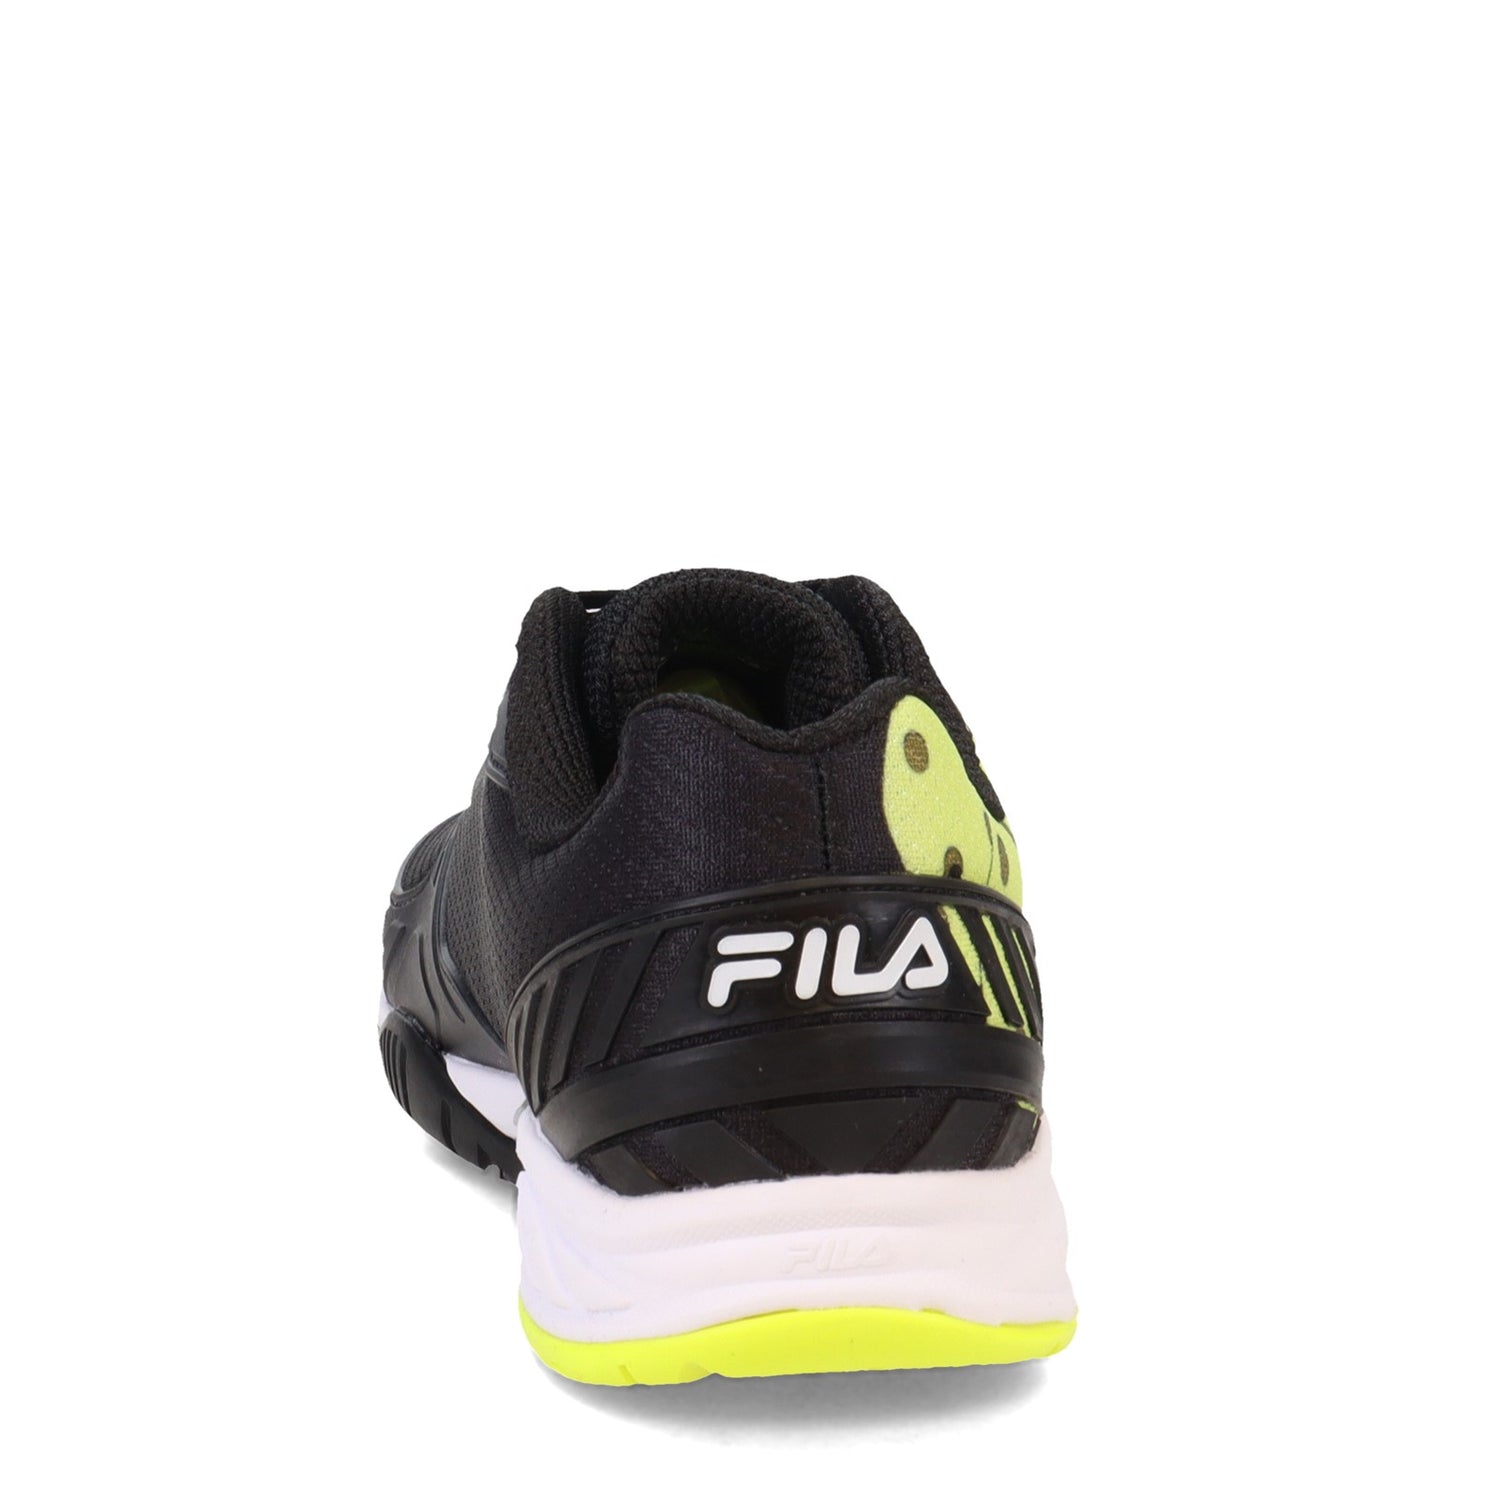 Peltz Shoes  Men's Fila Volley Zone Pickleball Shoe Black/White/Sfty 1PM00596-016